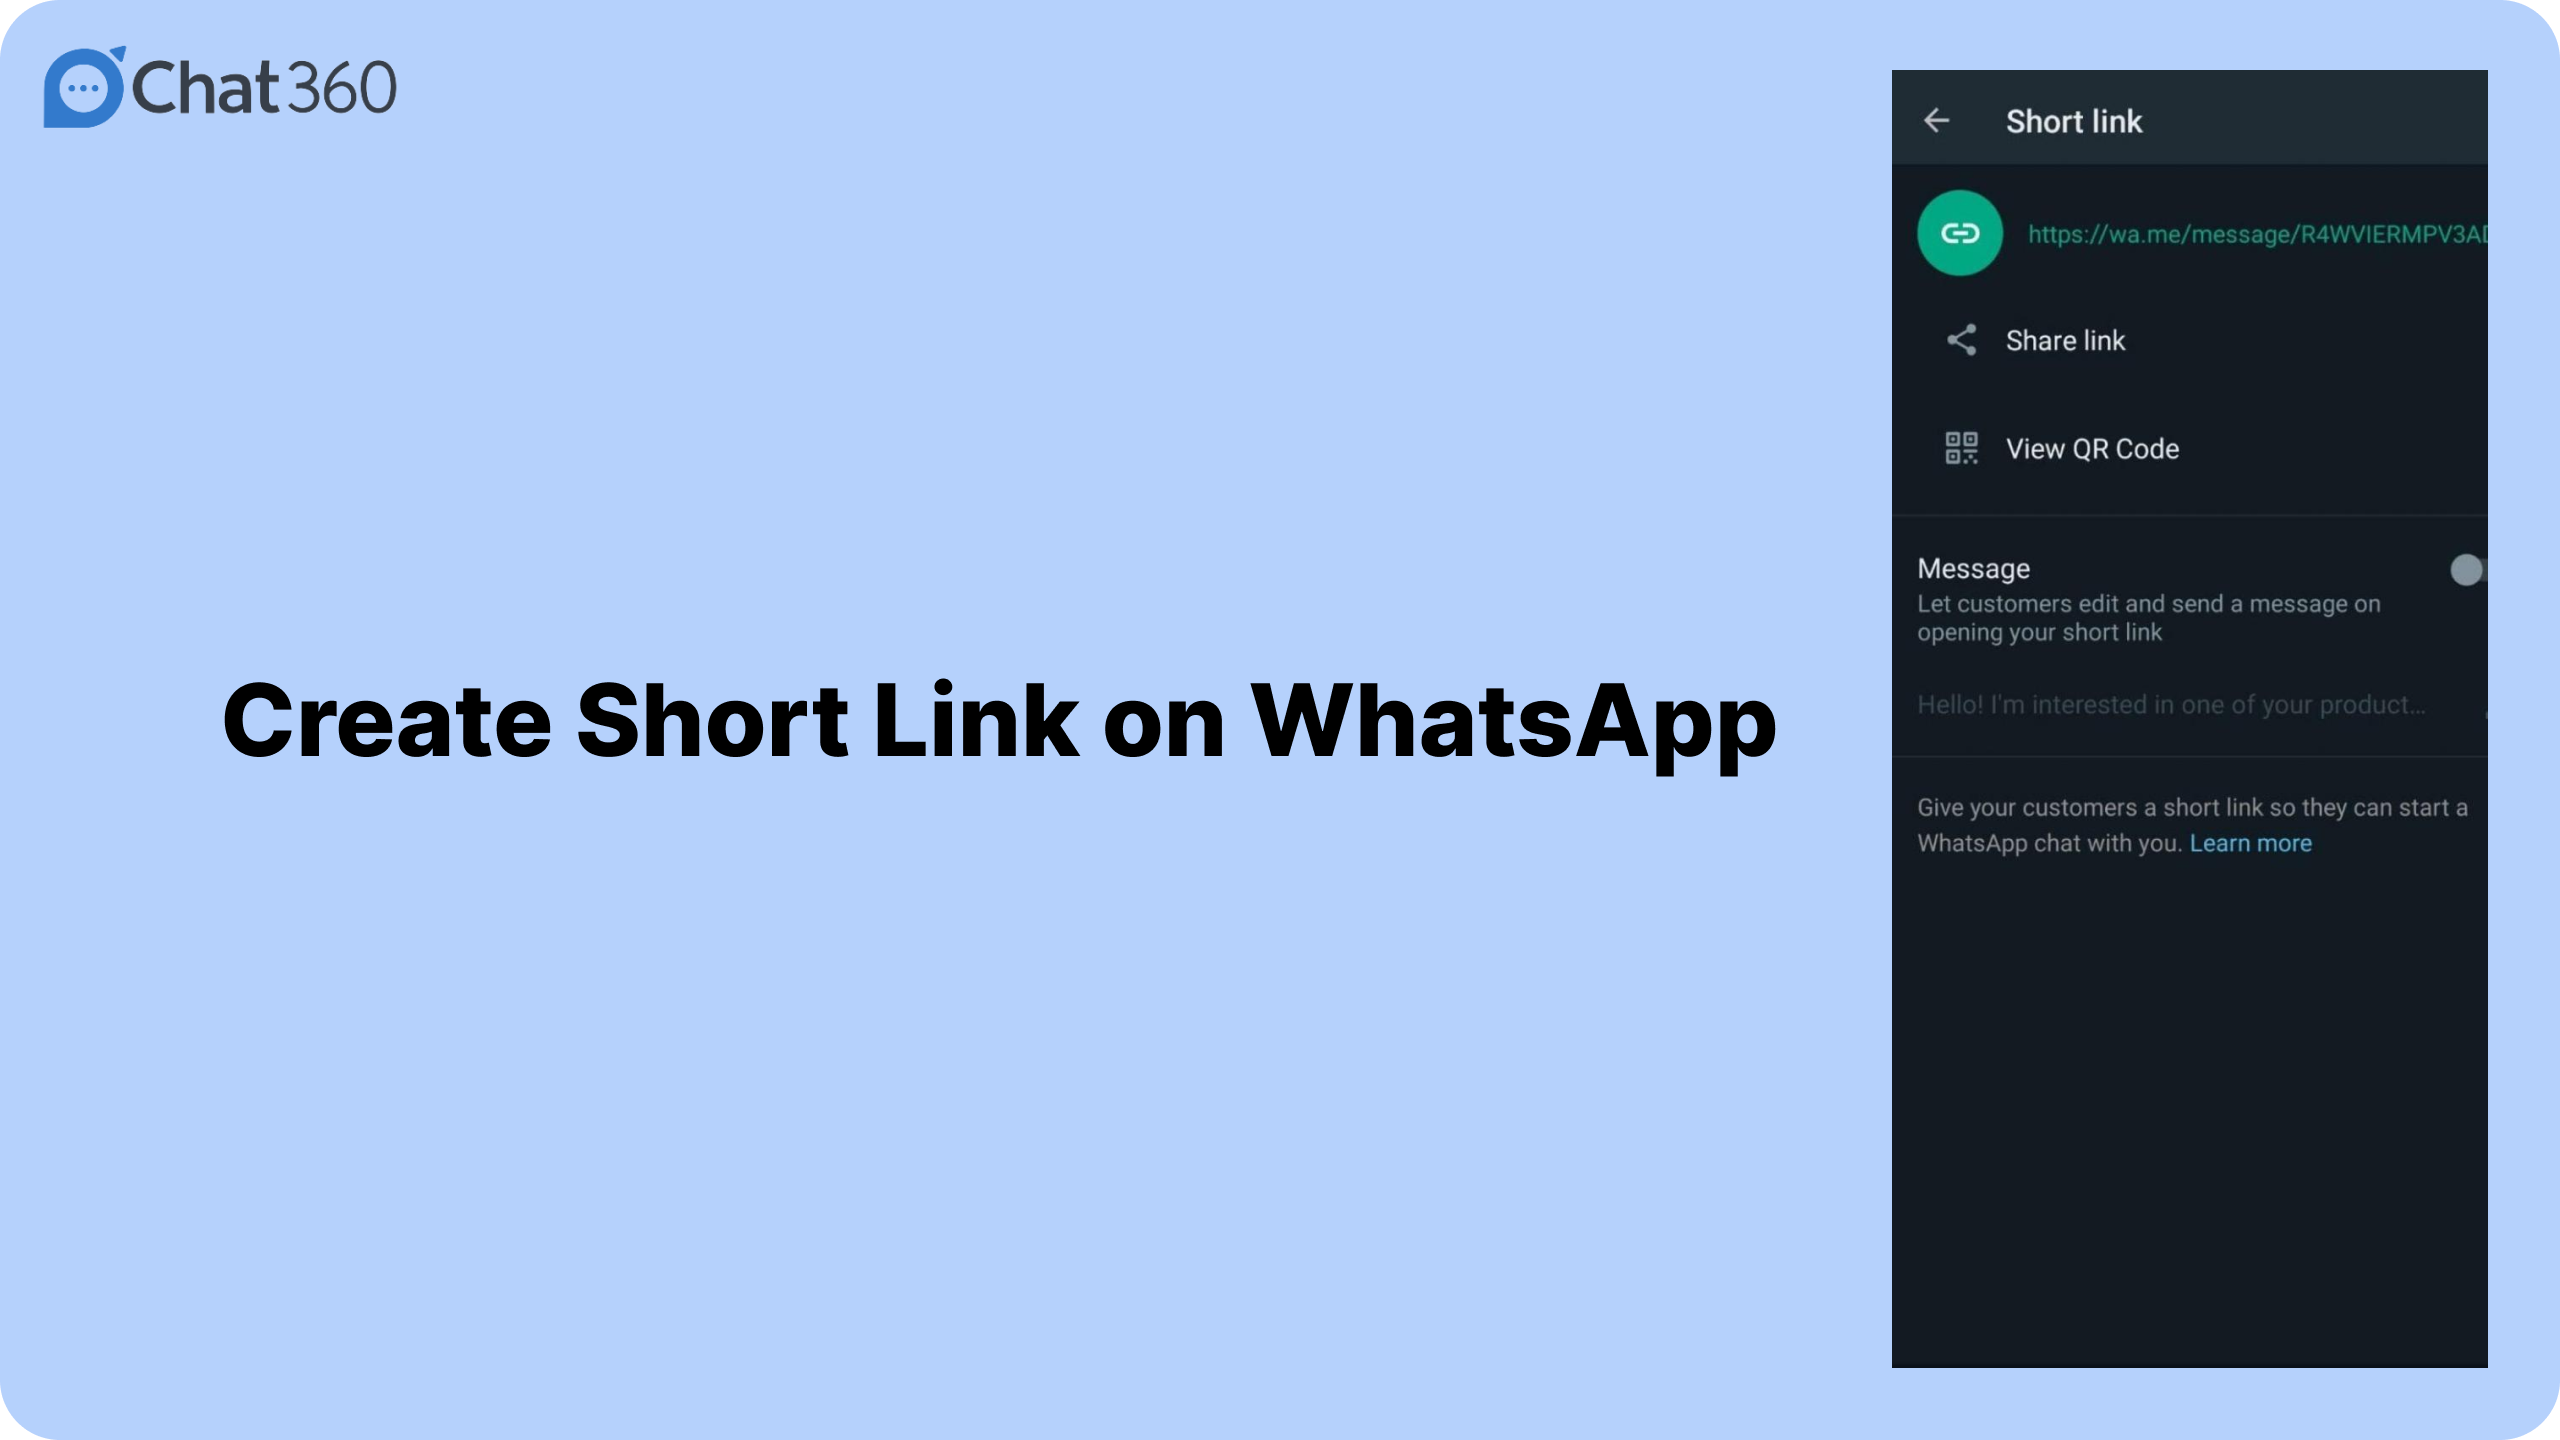 Creating short link on WhatsApp